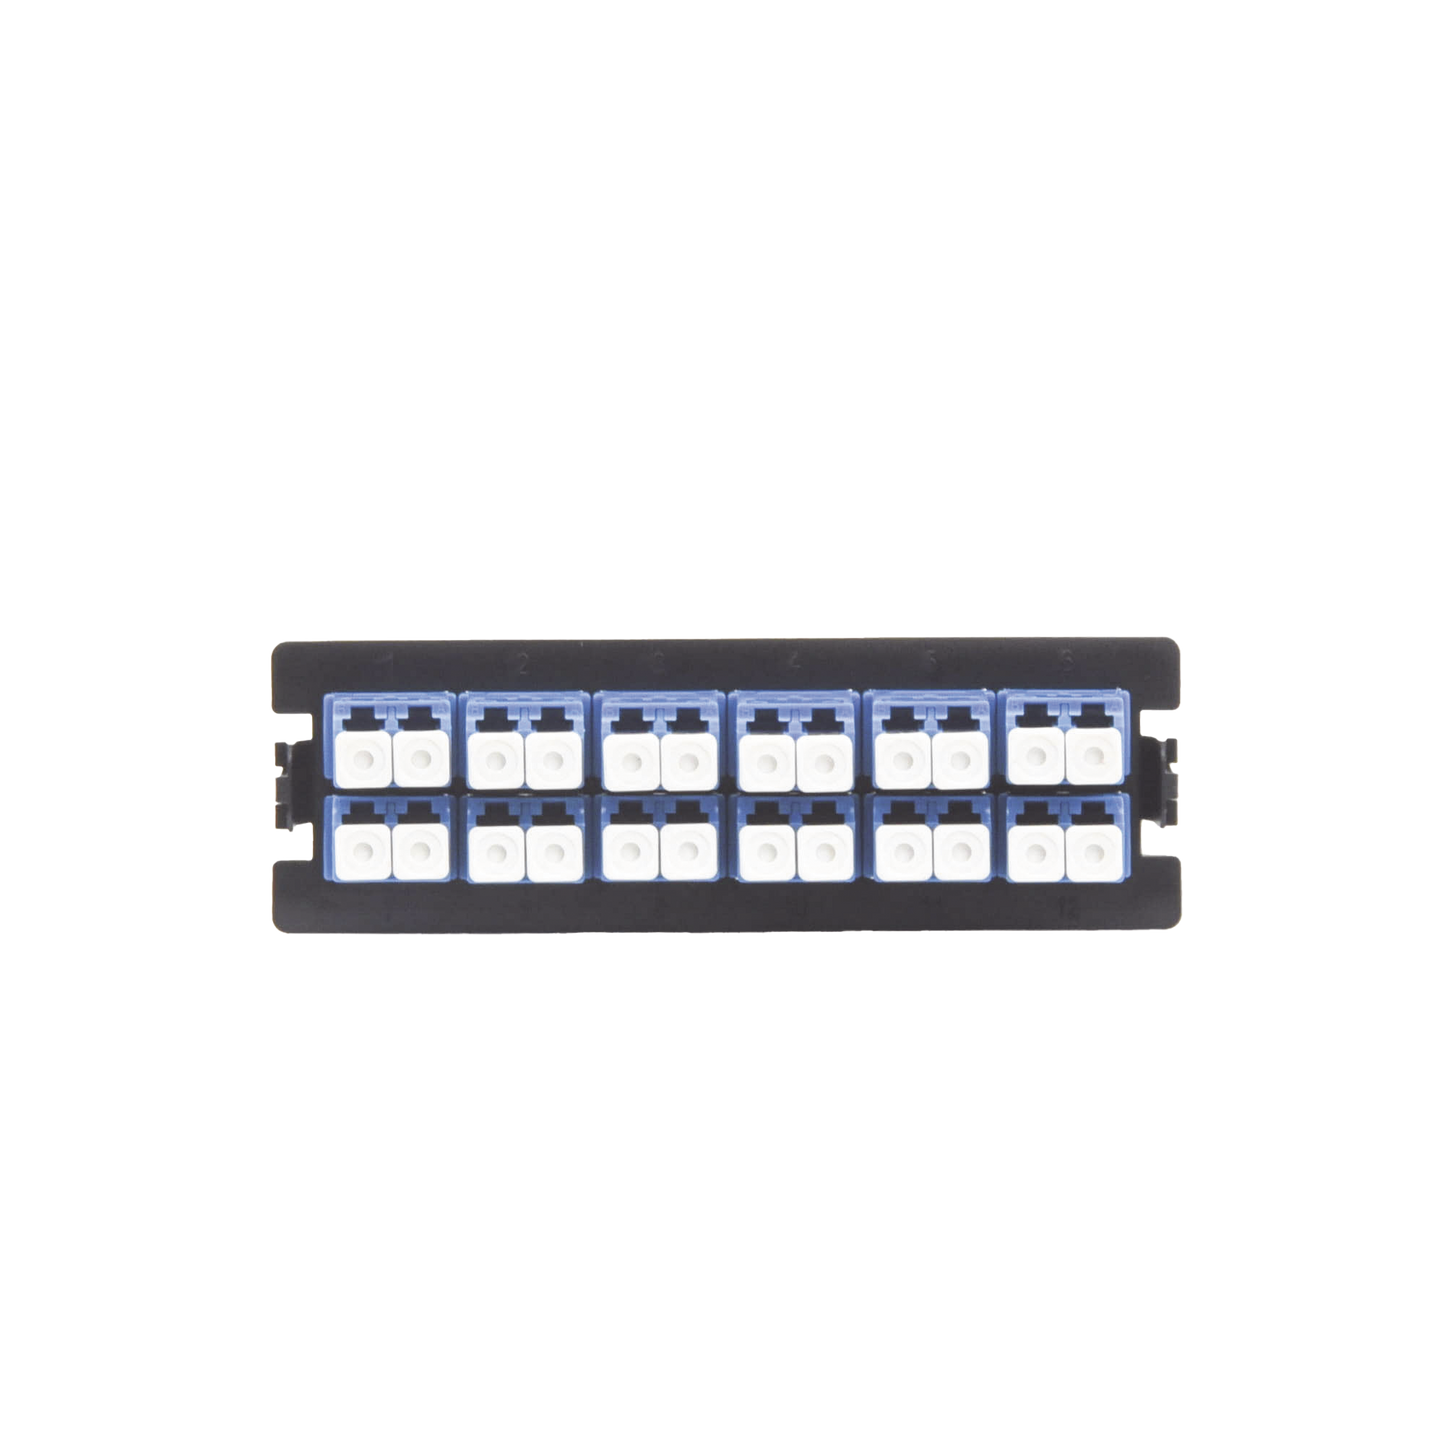 Placa acopladora para Distribuidor de Fibra Óptica LP-ODF-8024, incluye 12 acopladores LC Duplex Para fibra Monomodo